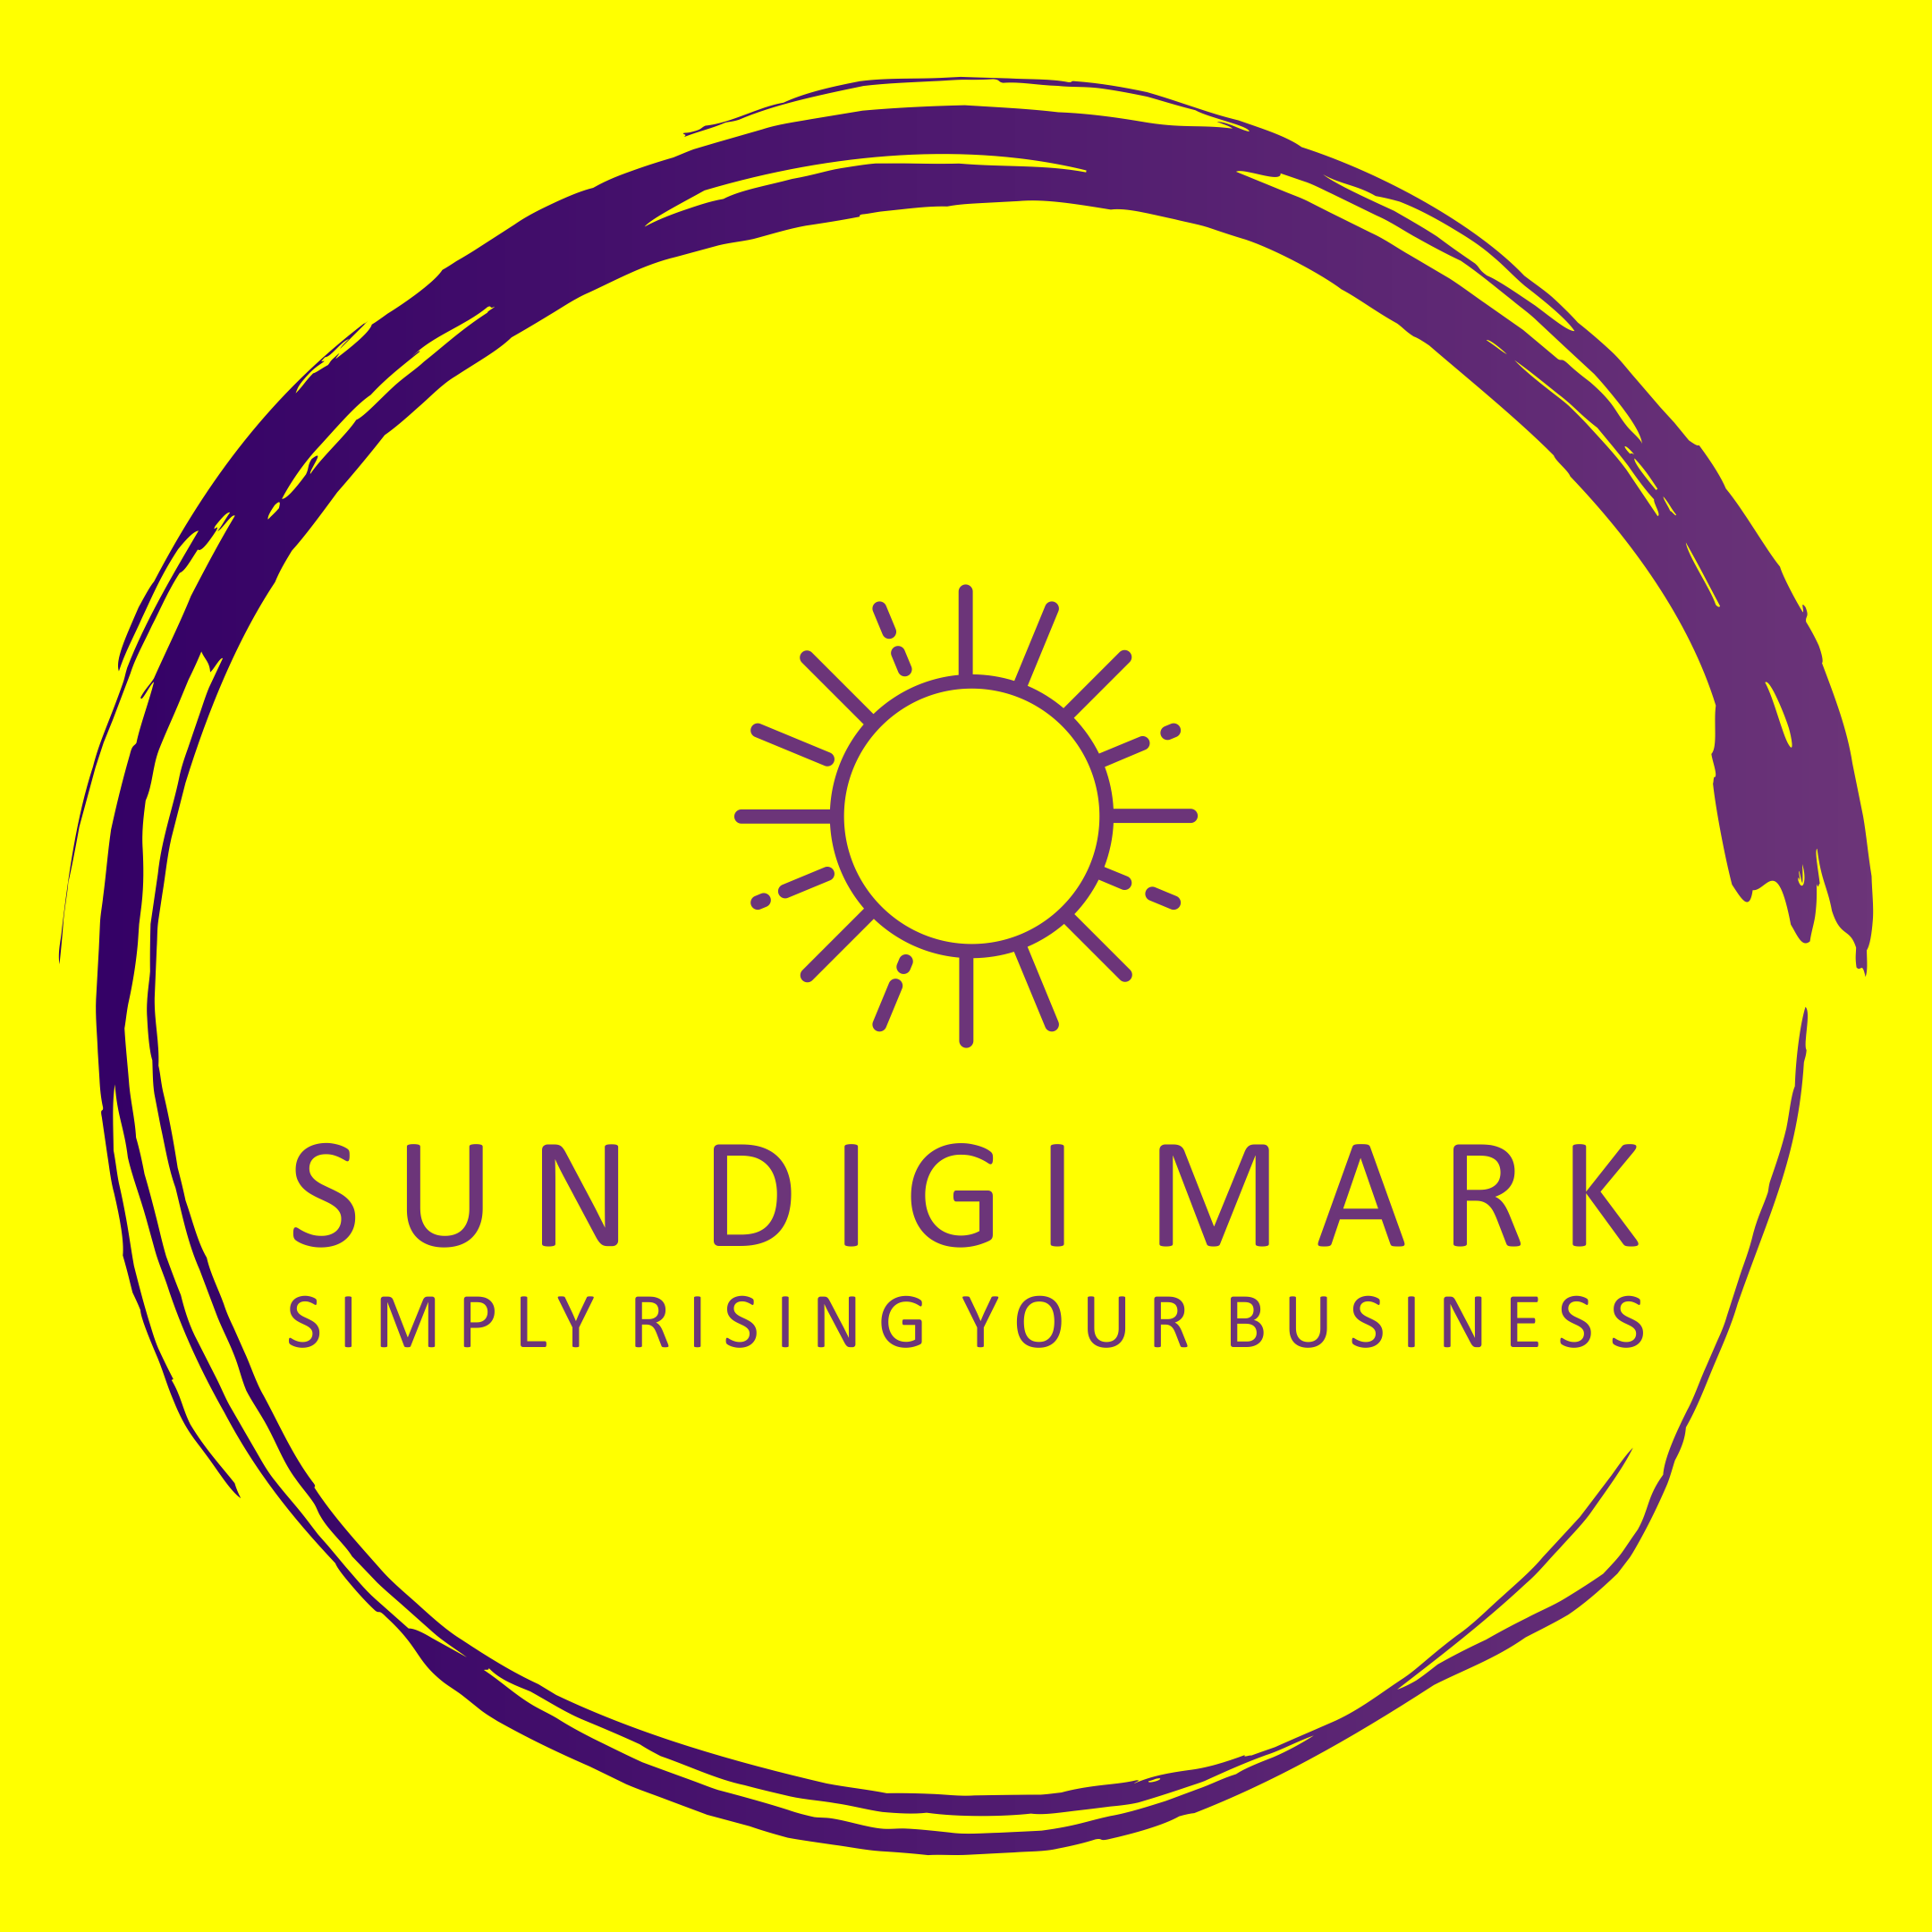 Sun Digi Mark profile on Qualified.One